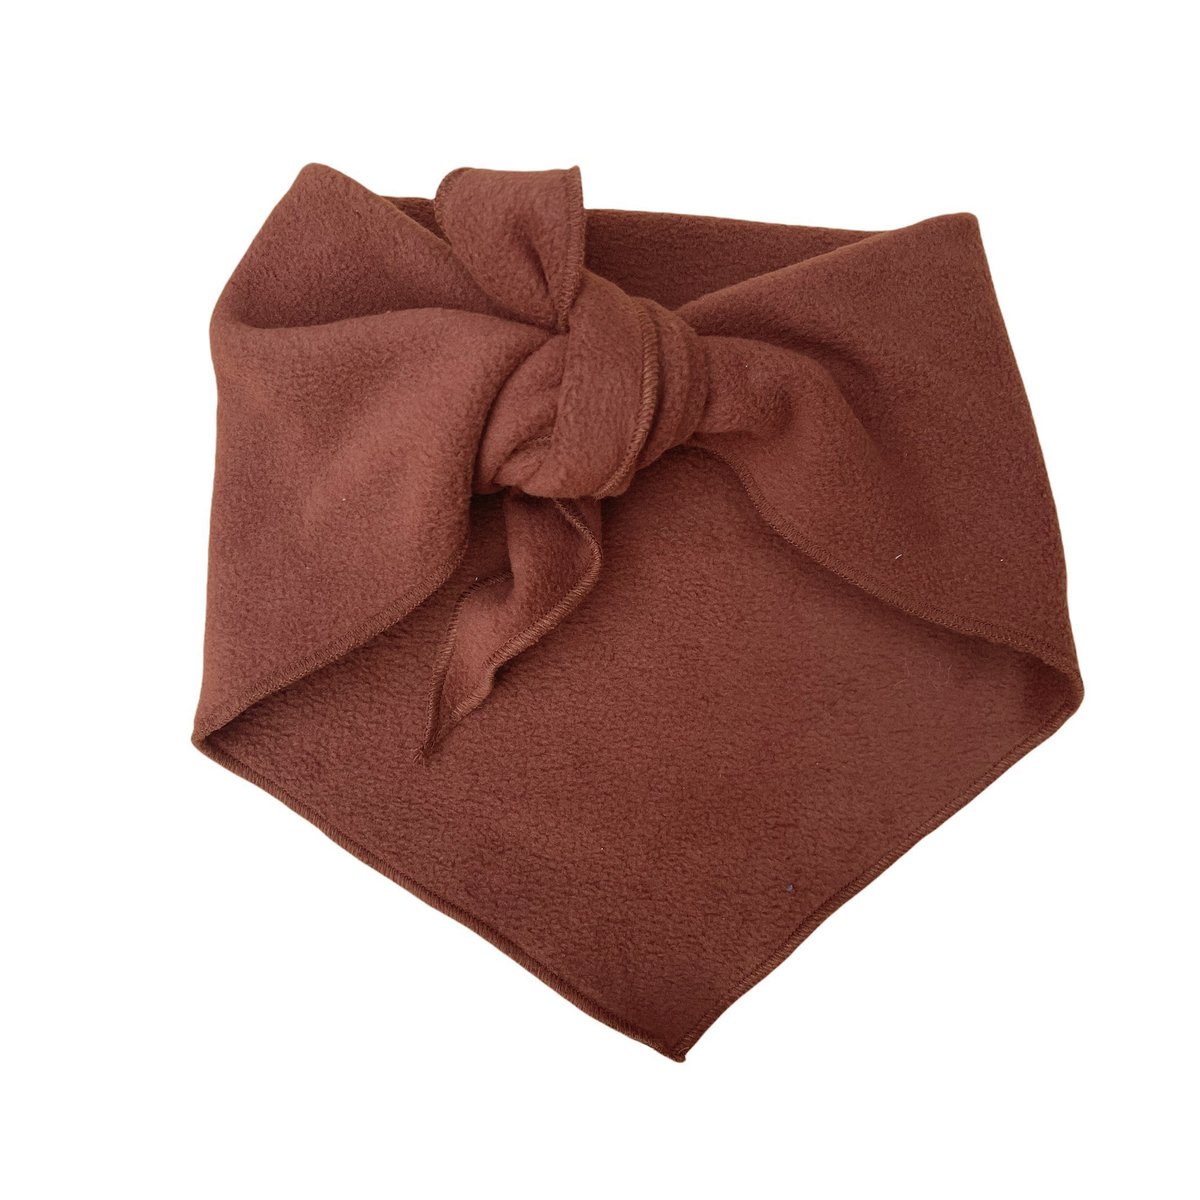 Image of Fleece Triangle Scarf - Chocolate Brown